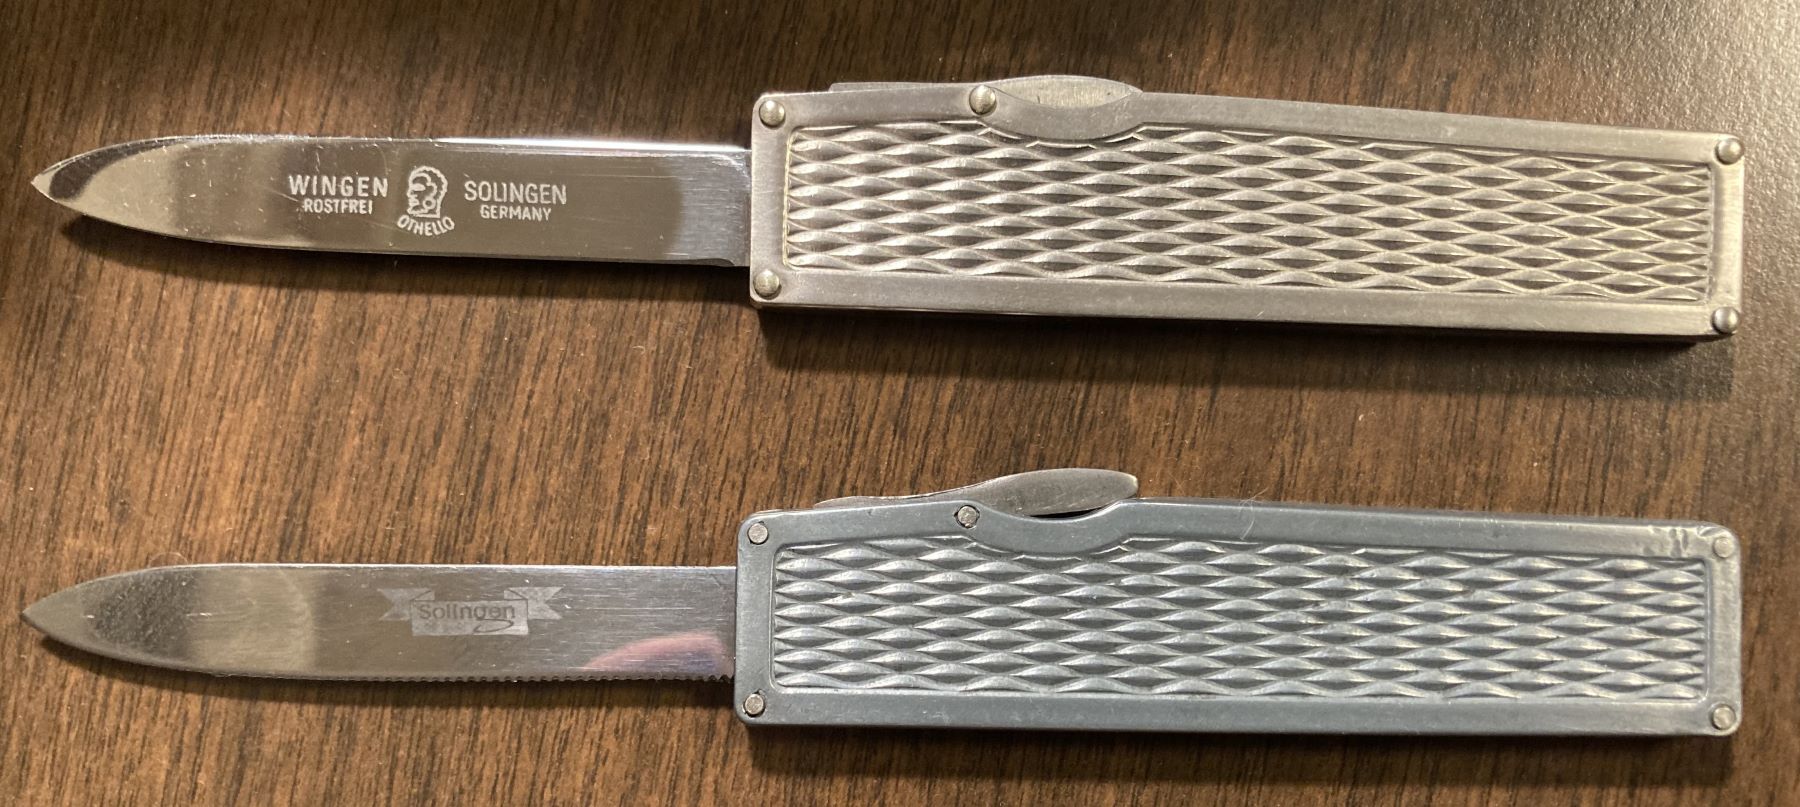 Pair of Anton Wingen small gravity knives.